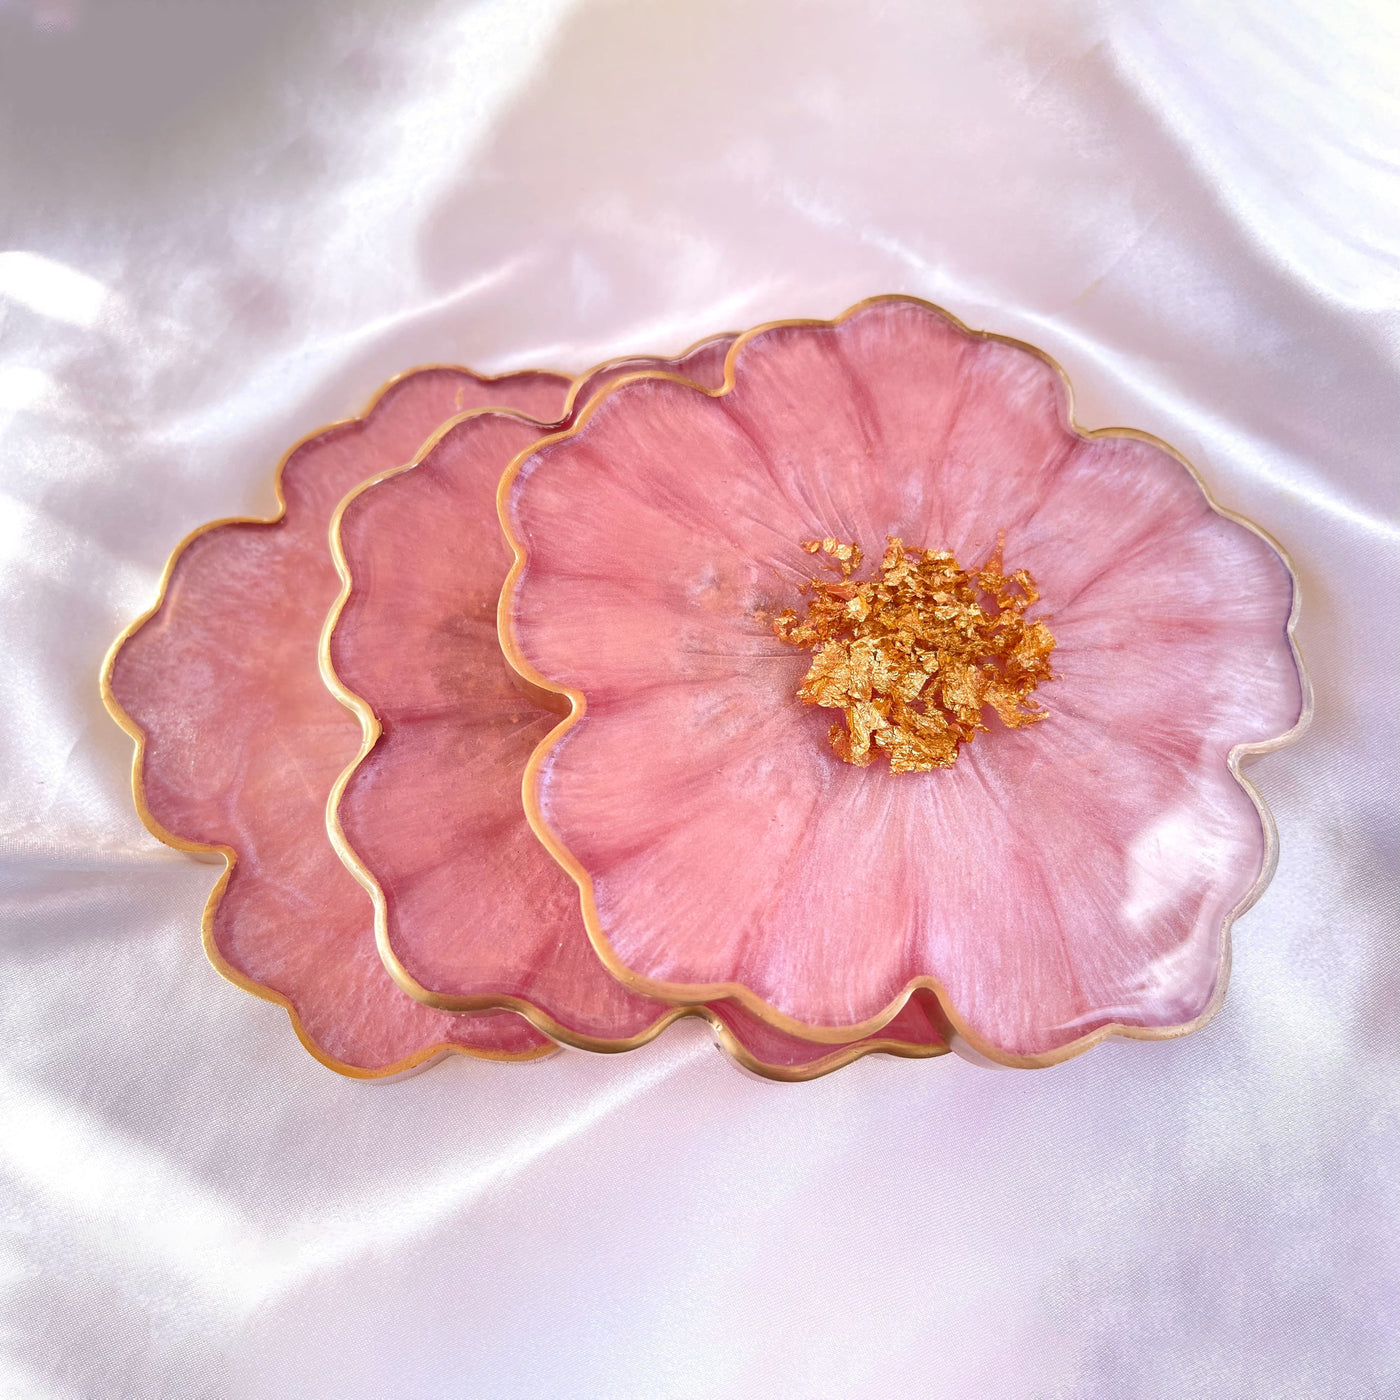 Handmade Cherry Blossom Baby Pastel Pink and Gold Resin Flower Shaped Coasters Set - Jasmin Renee Art - Three Coasters Gold Rim Edges